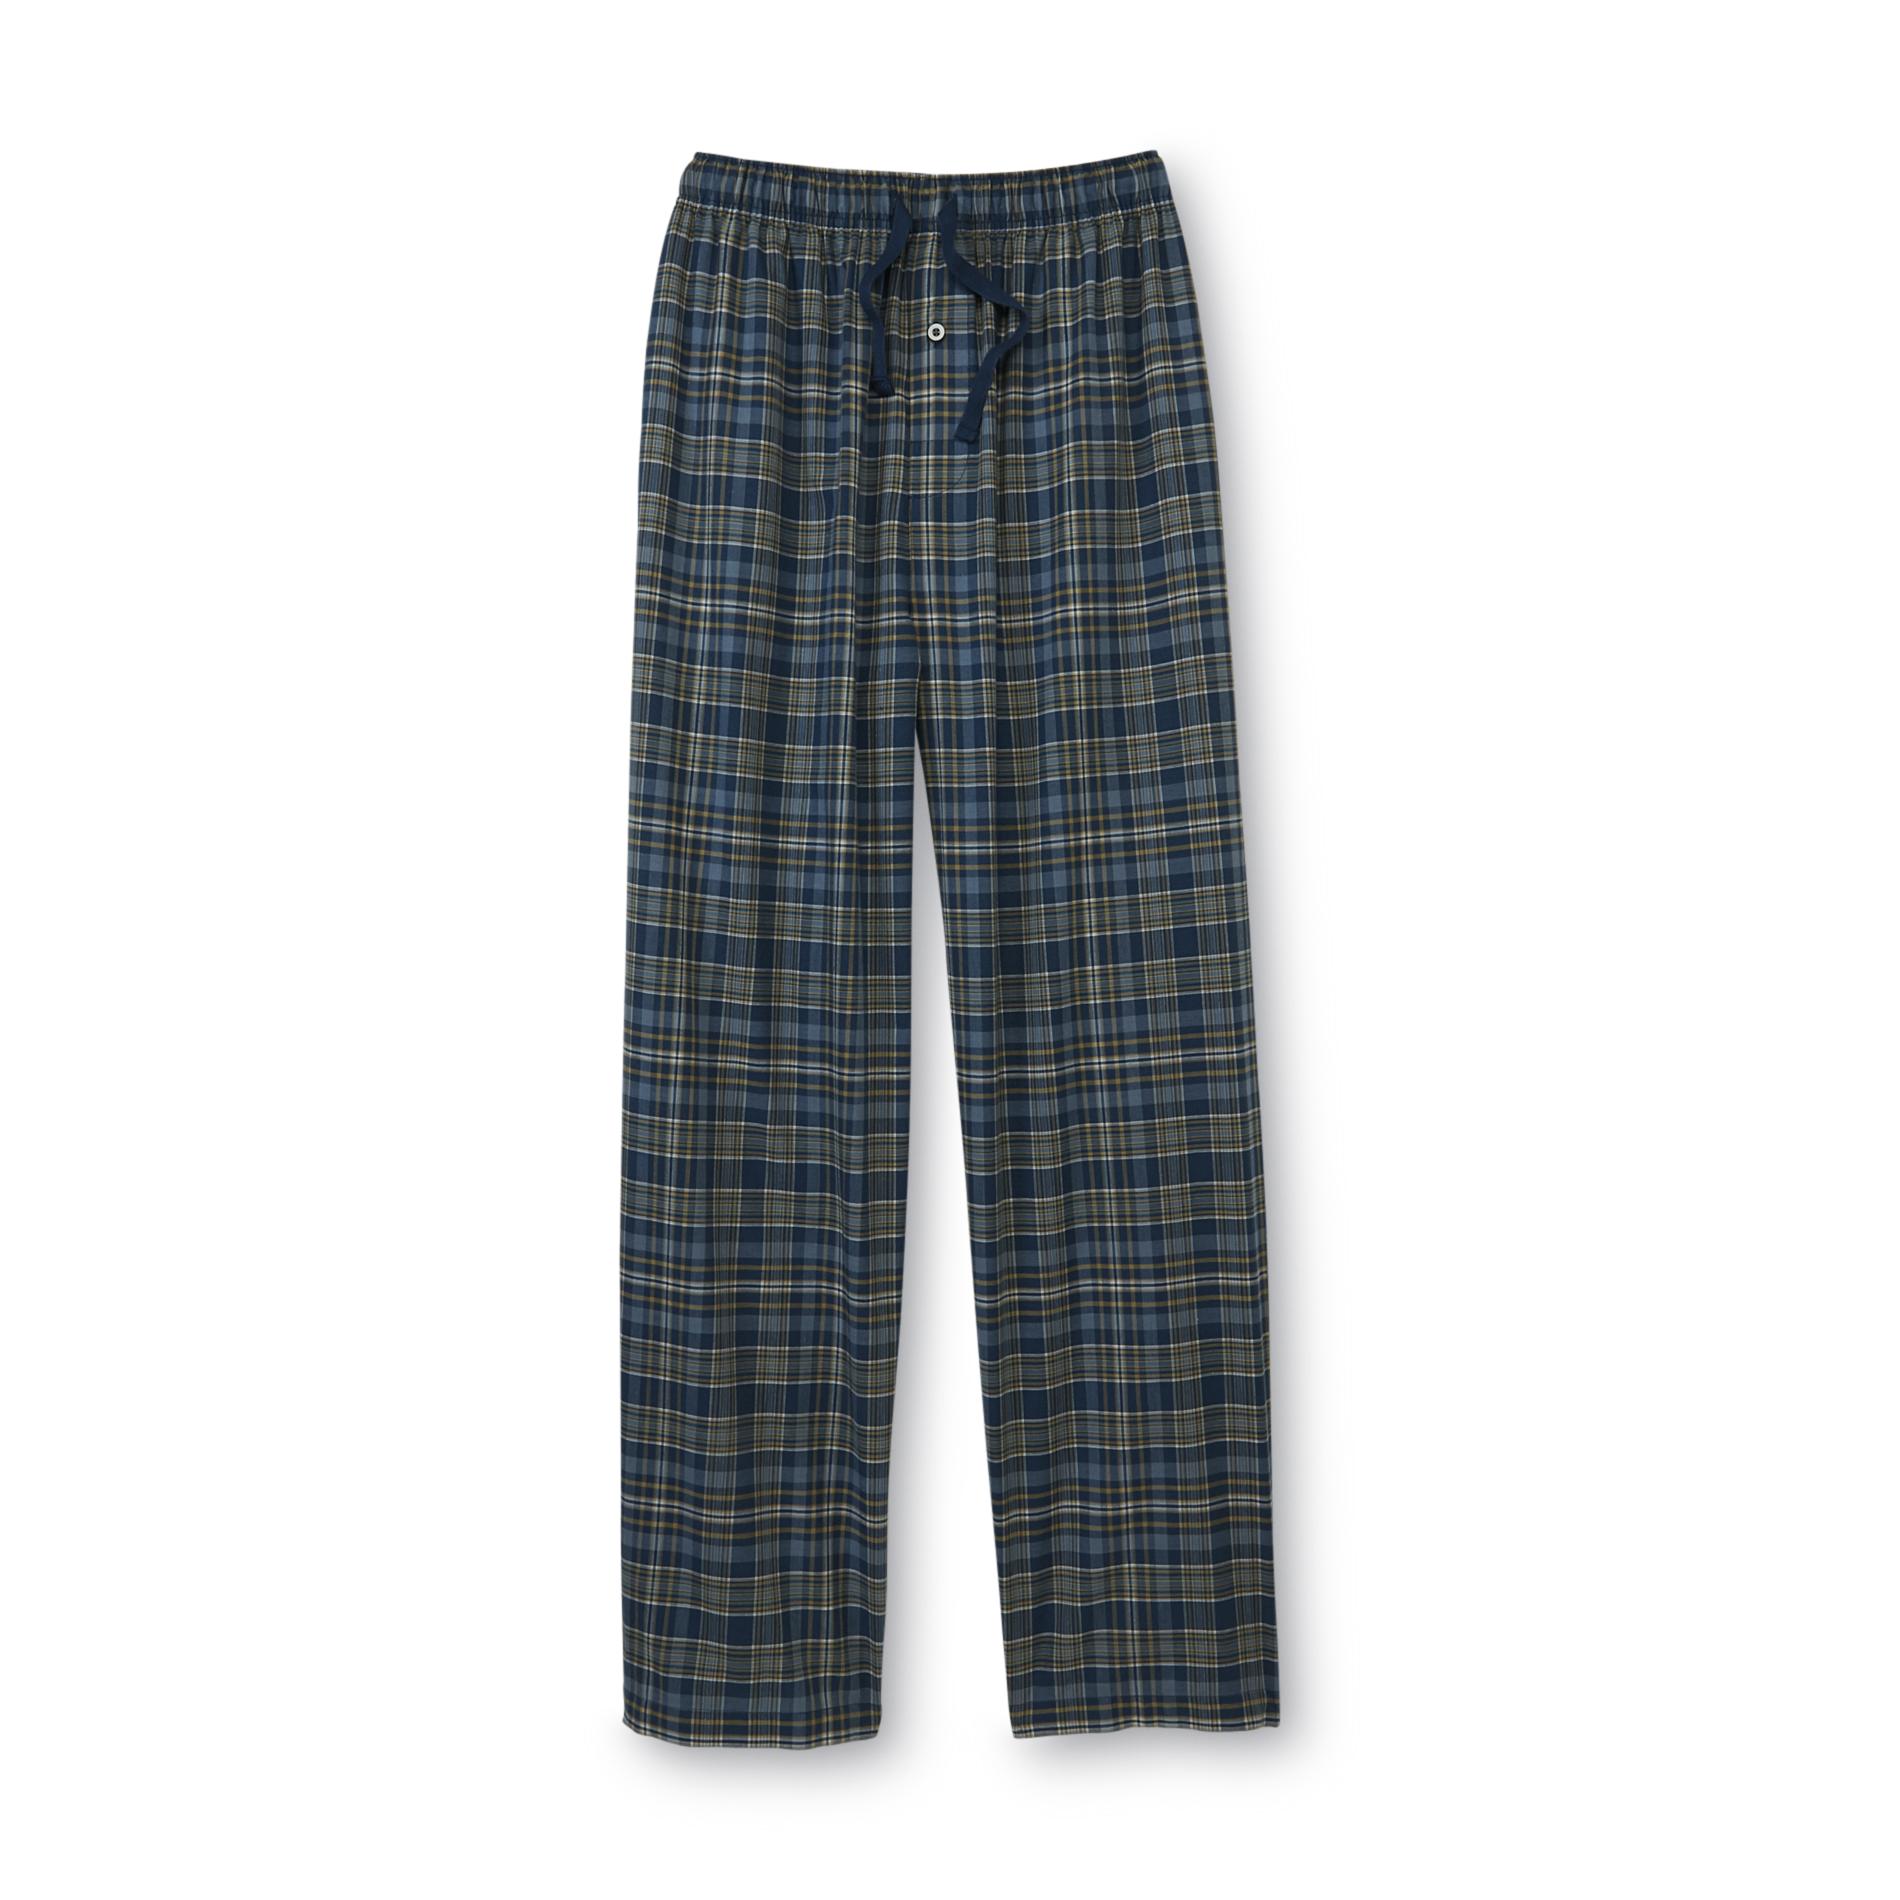 Basic Editions Men's Pajama Pants - Plaid - Clothing - Men's Clothing ...